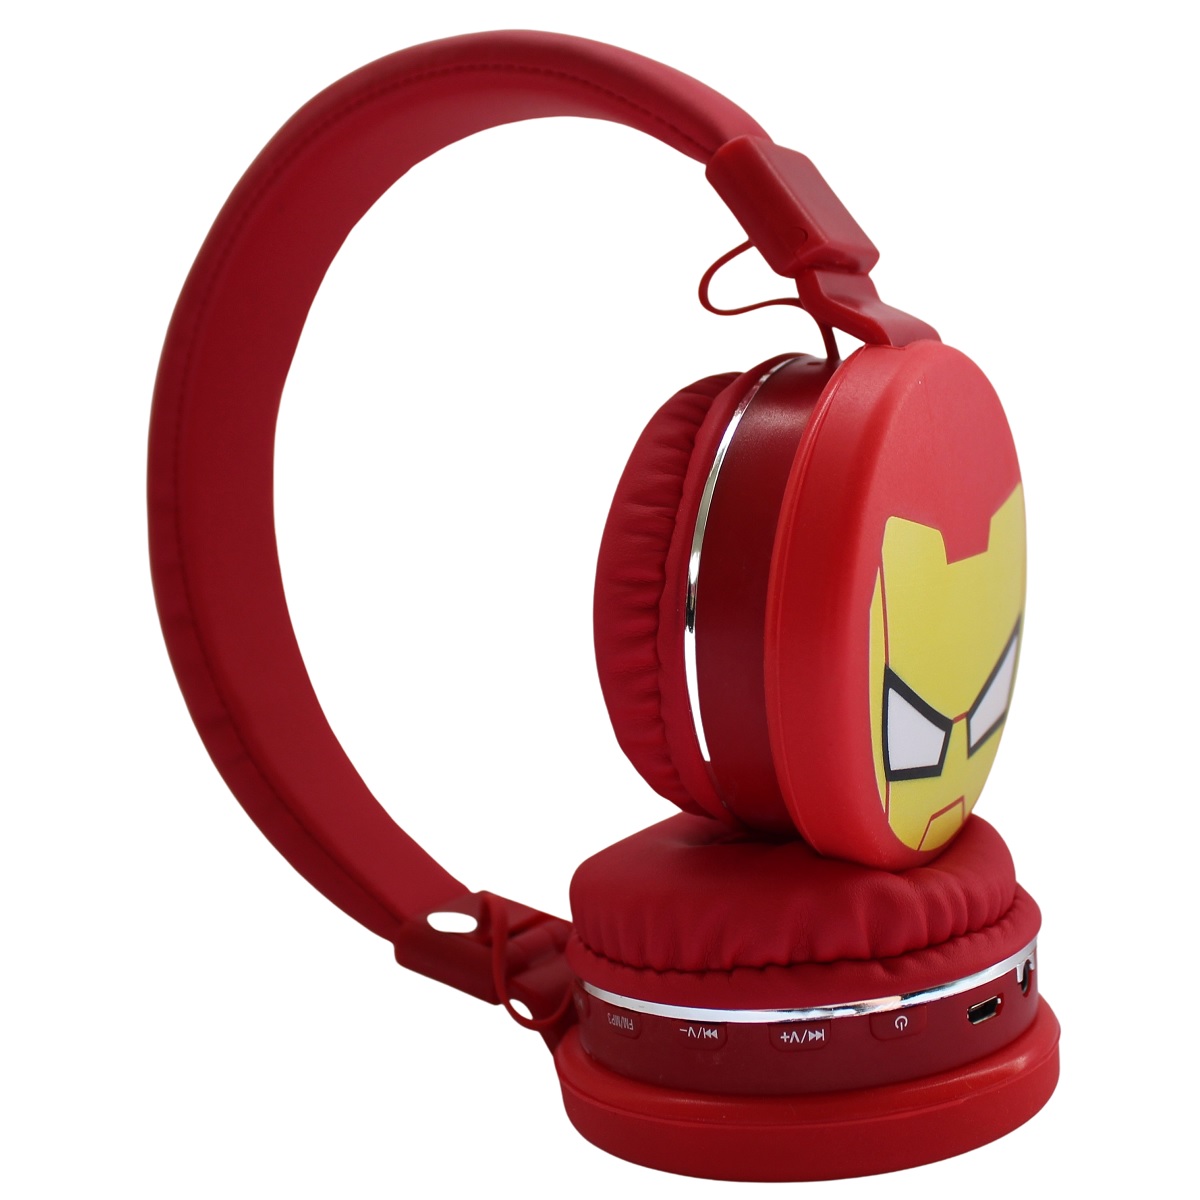 Audífonos inalámbricos de diadema - Iron Man de Marvel